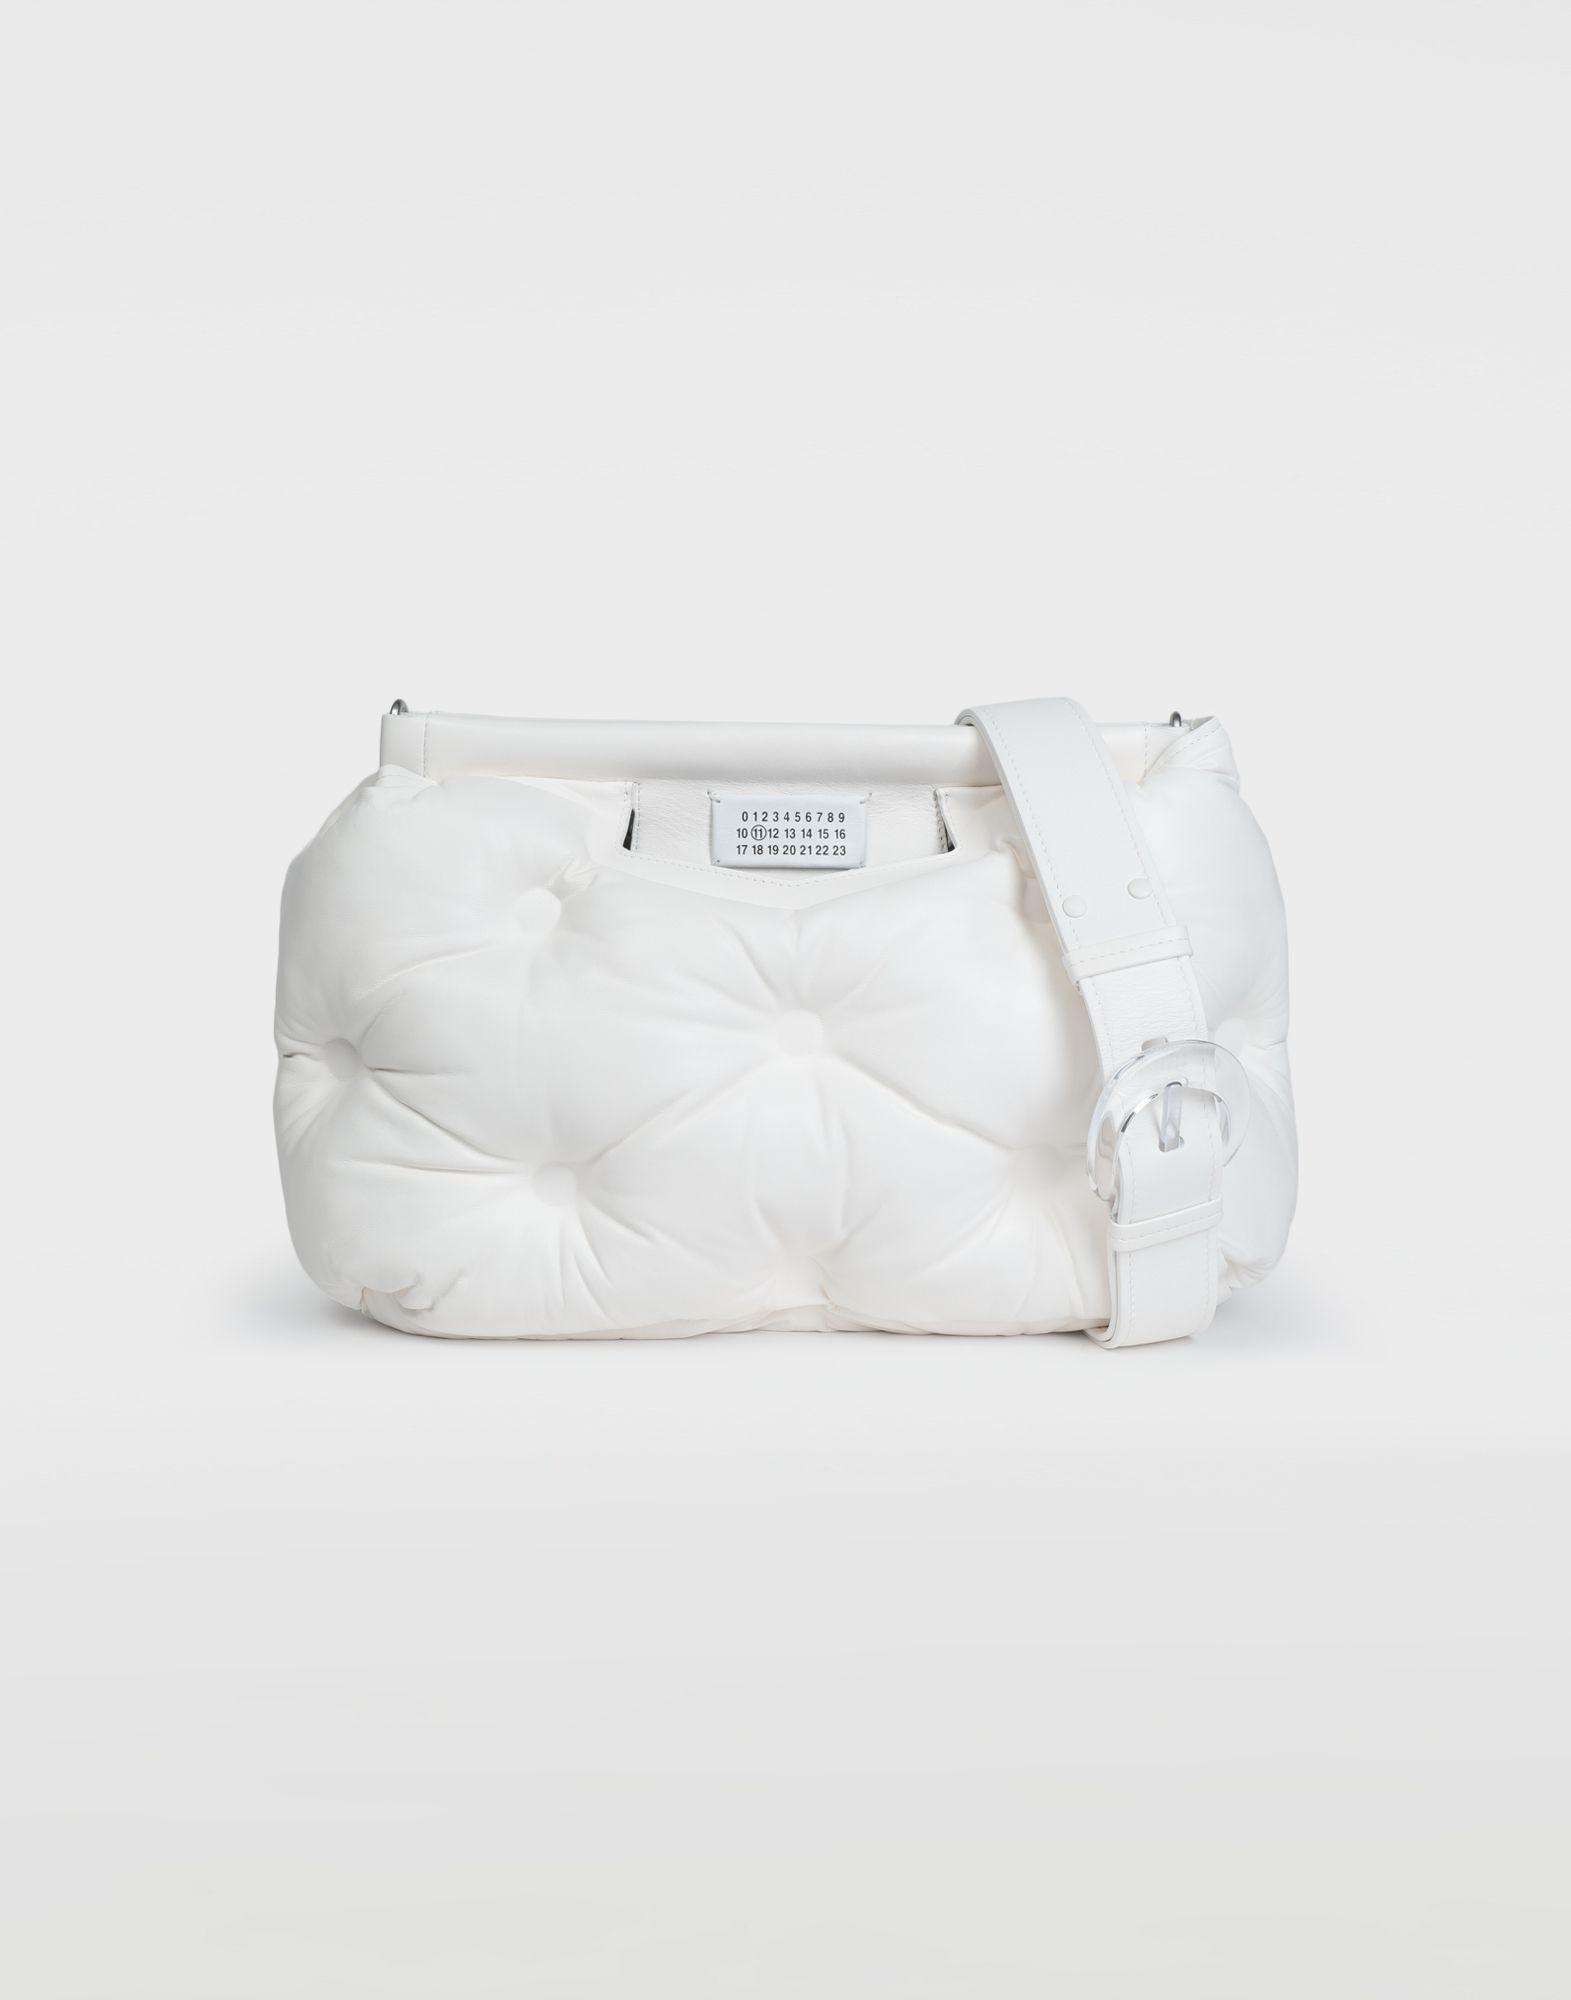 Maison Margiela Leather Medium Glam Slam Bag in White - Lyst